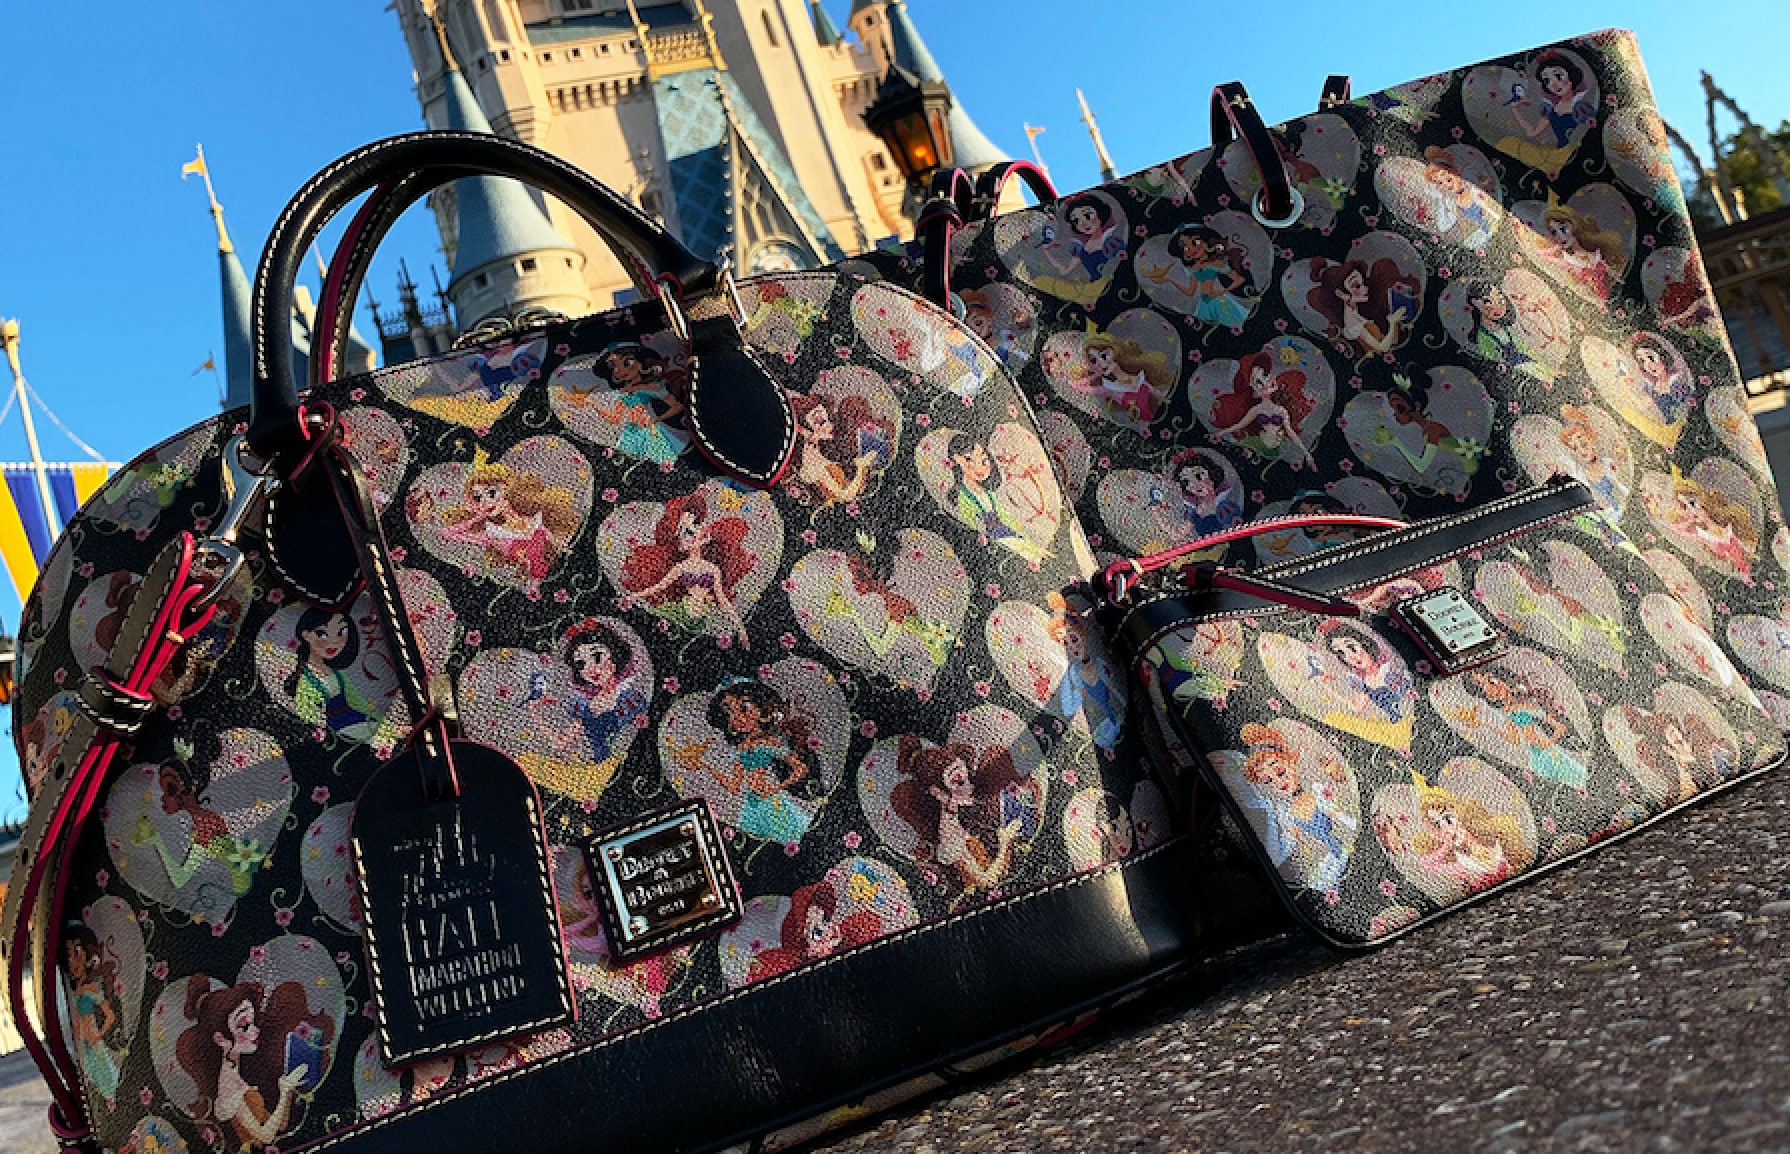 Disney Princess-inspired handbags by Dooney & Bourke